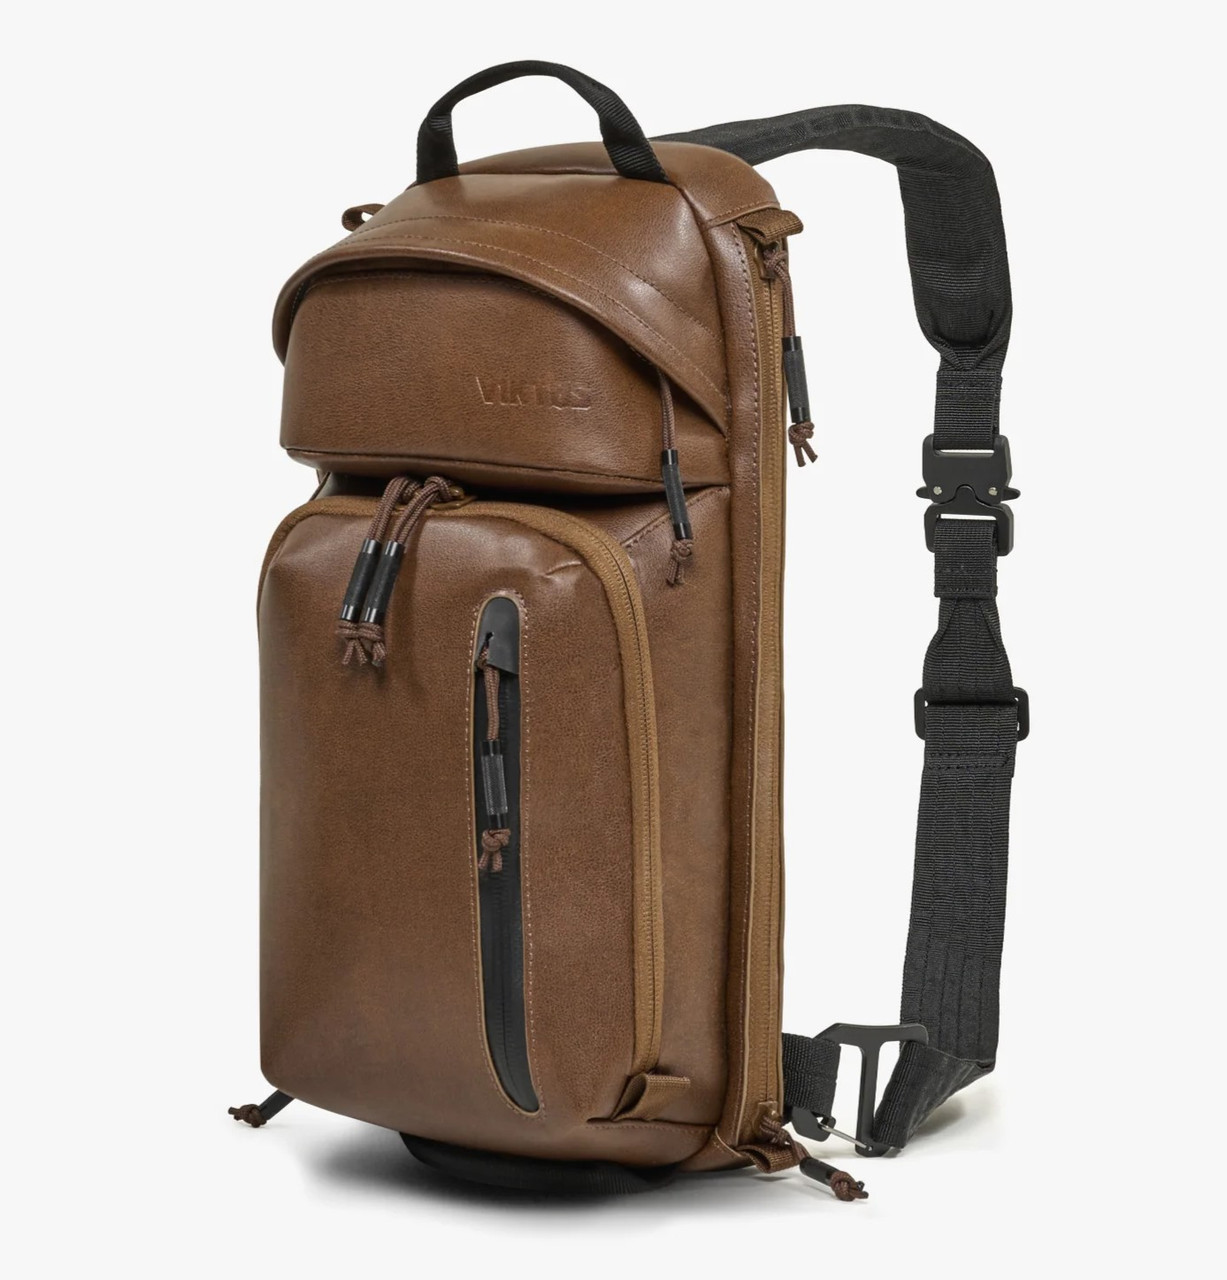 Leather Sling Bag with indigo print fabric - directcreate.com